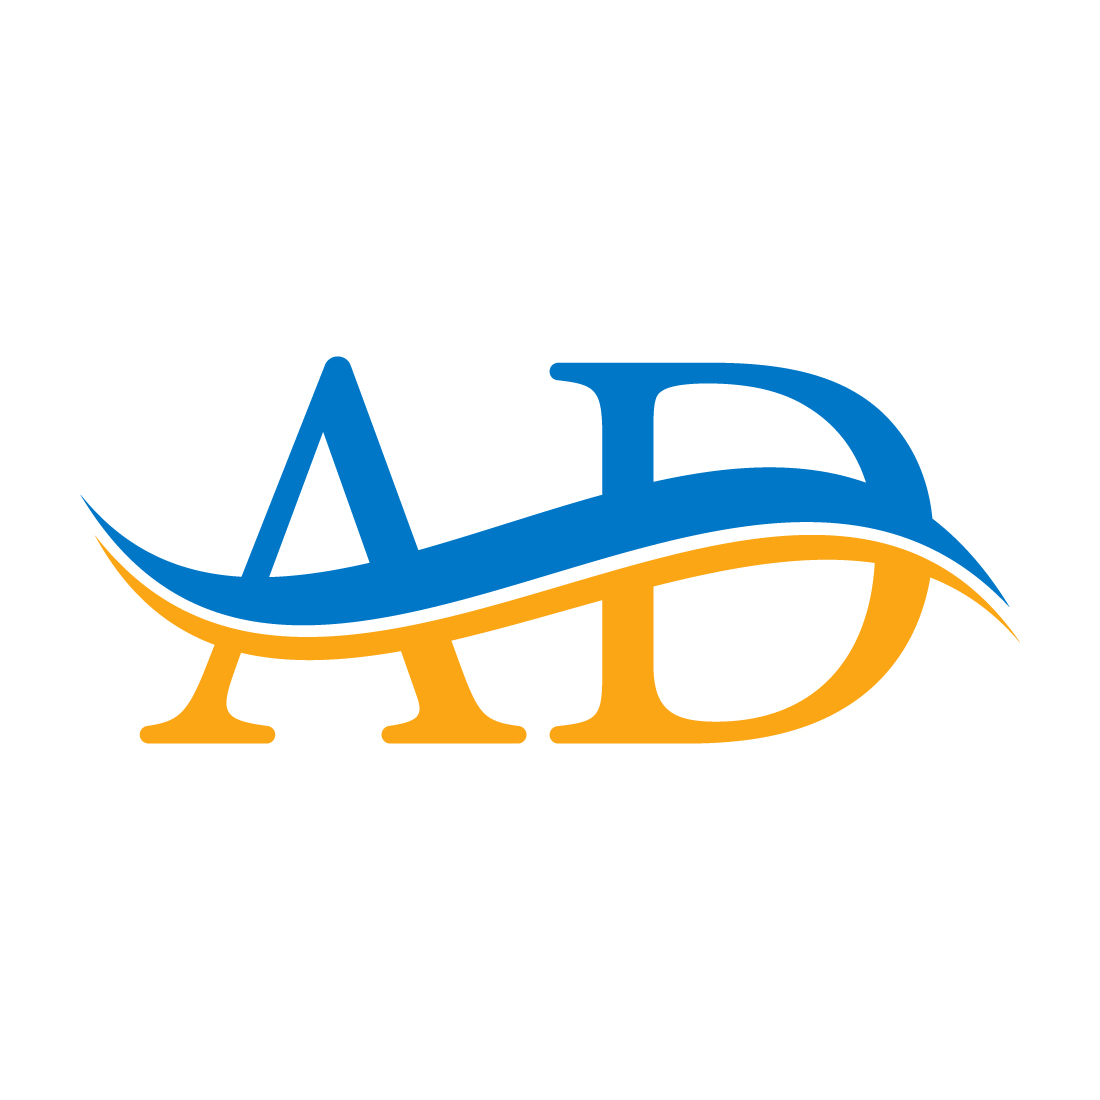 Initial AD Letter logo design, Vector design concept preview image.